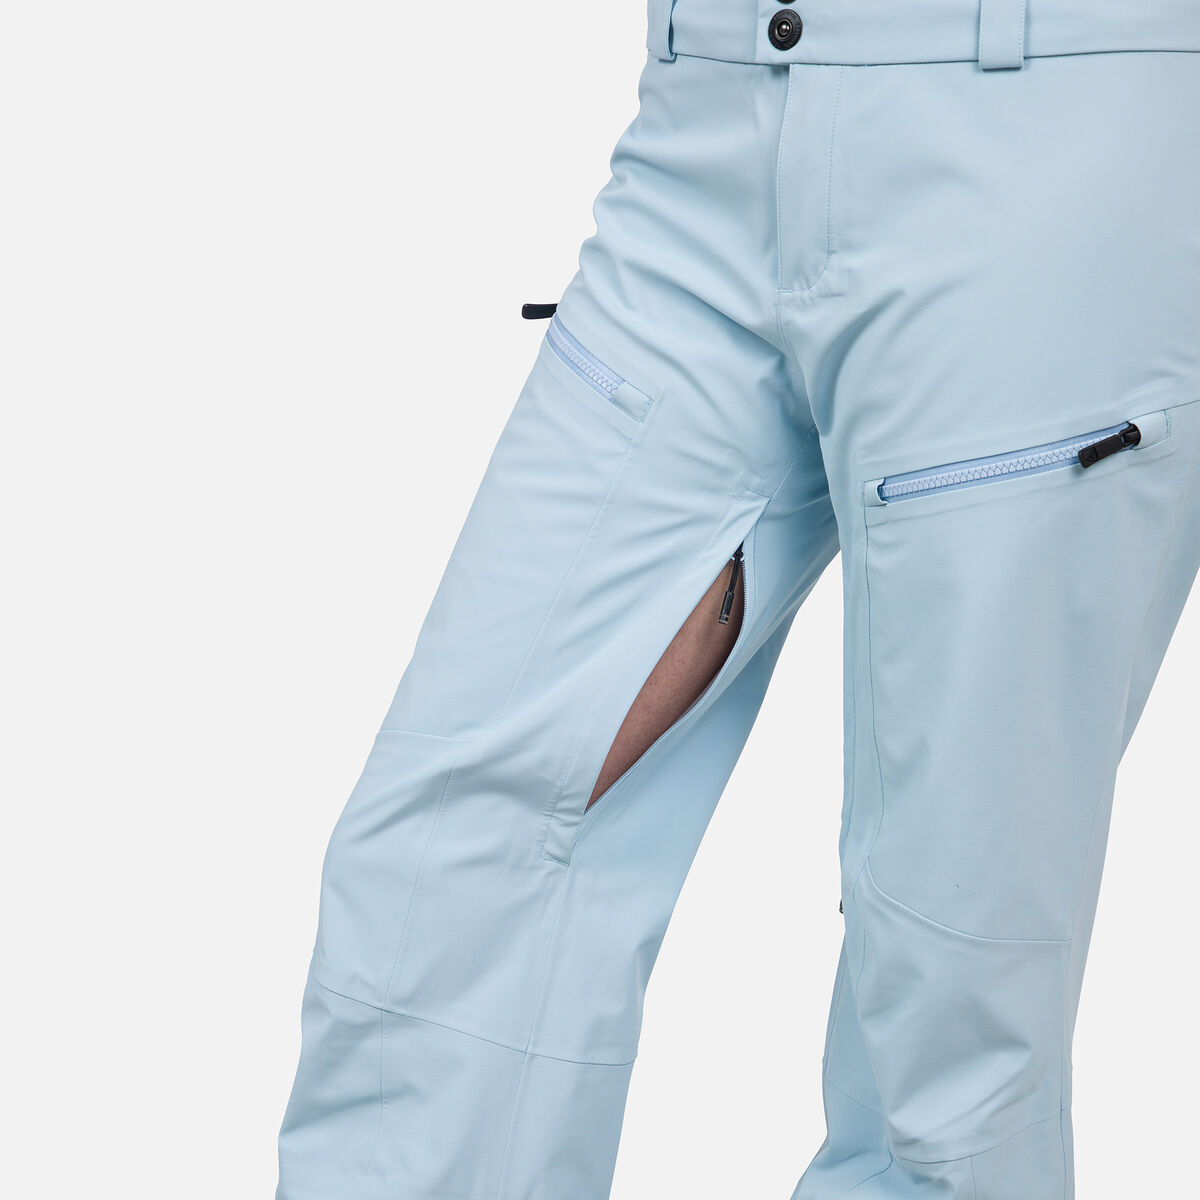 Rossignol Pantalon de ski SKPR 3 couches Ayr femme blue